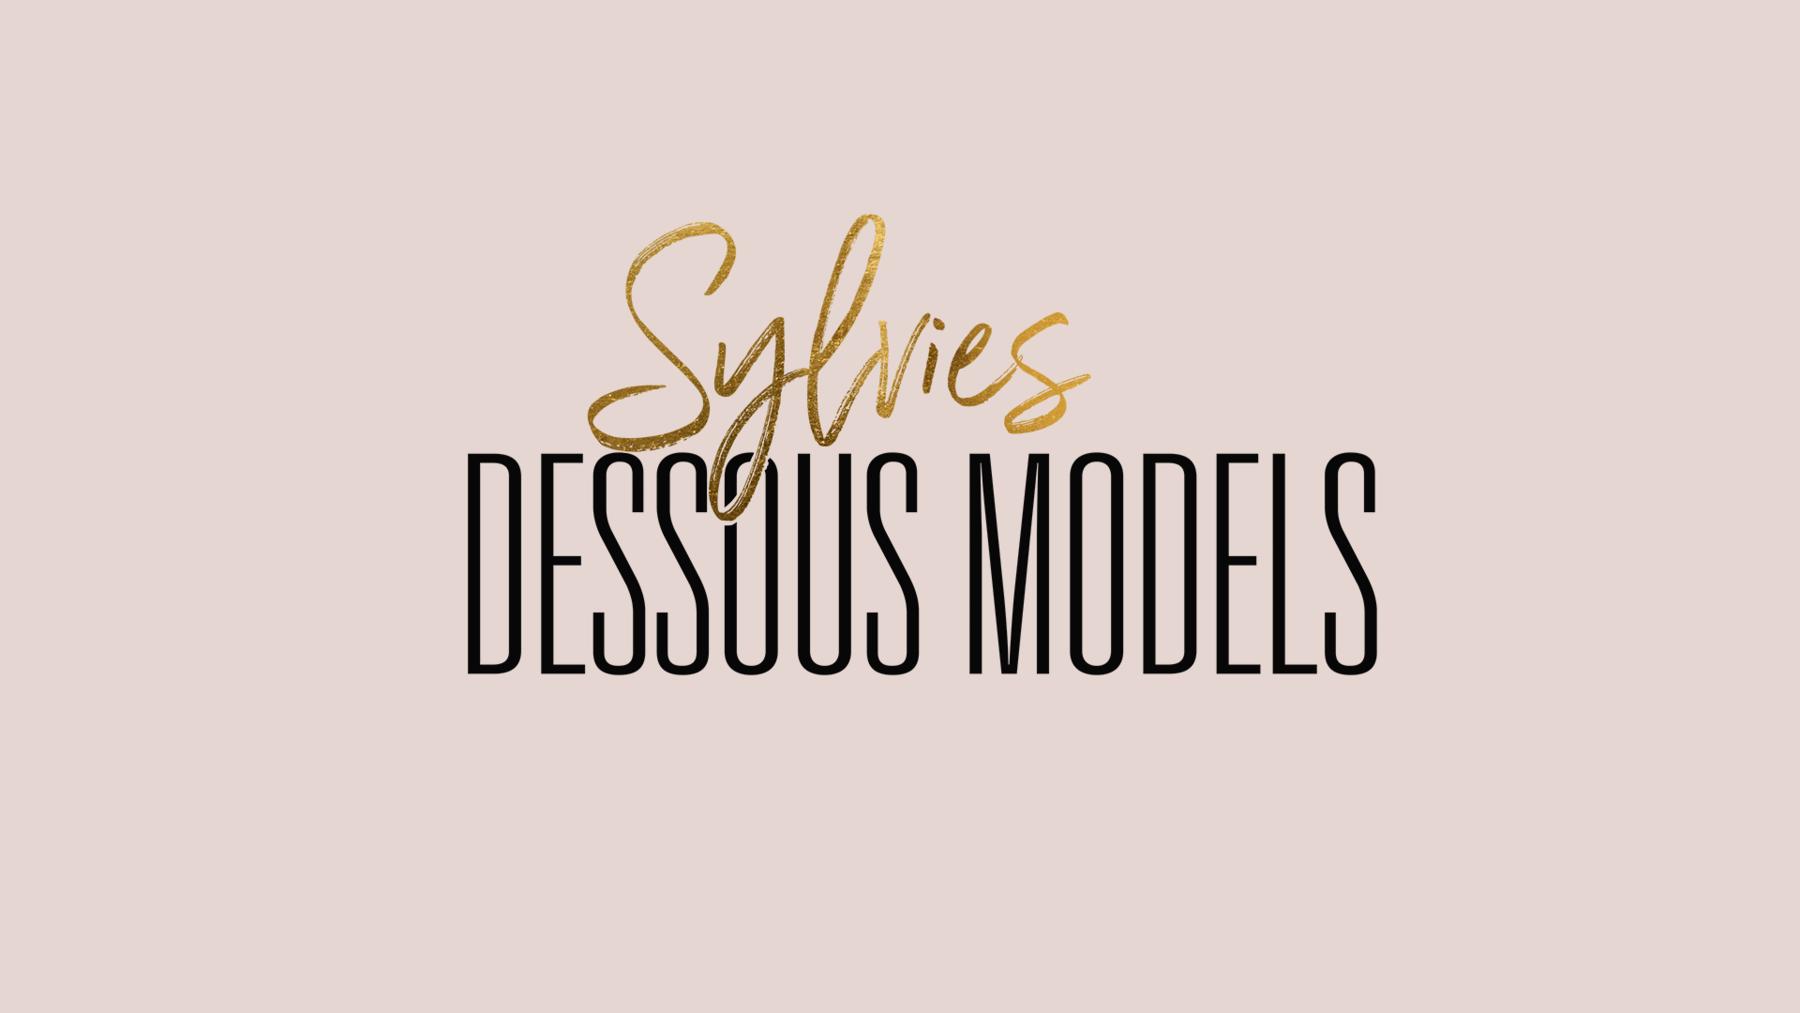 Sylvies Dessous Models